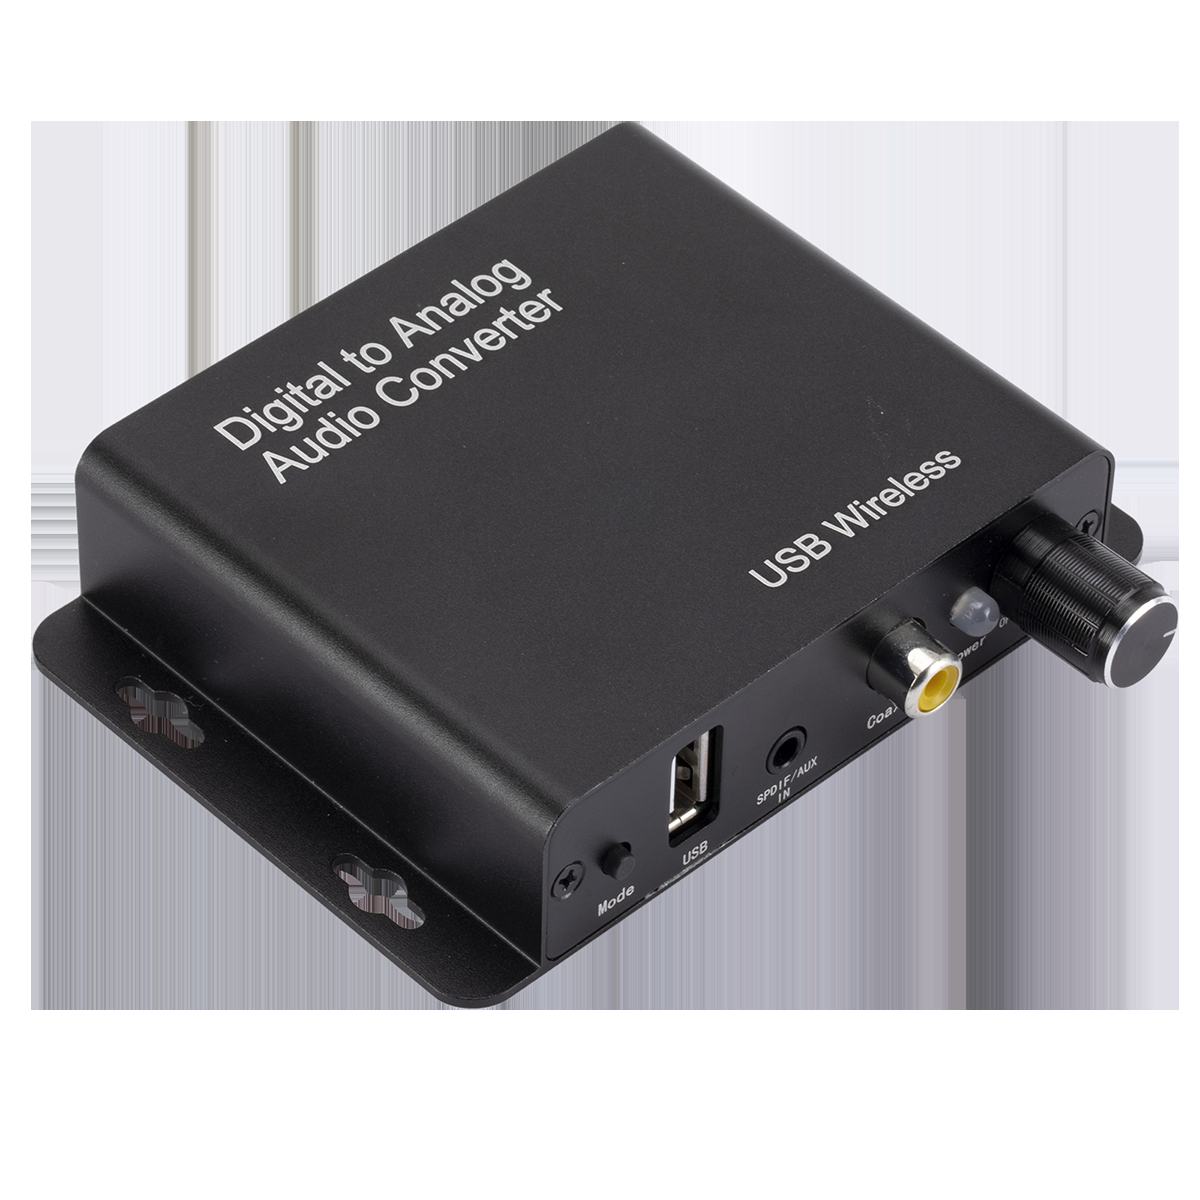 Mnnwuu Digital Fiber Coaxial to Analog RAC AUX 3.5 Bluetooth 5.0 Receiver Signal Adapter Converter with USB Port for Headphone Speaker Audio U Disk